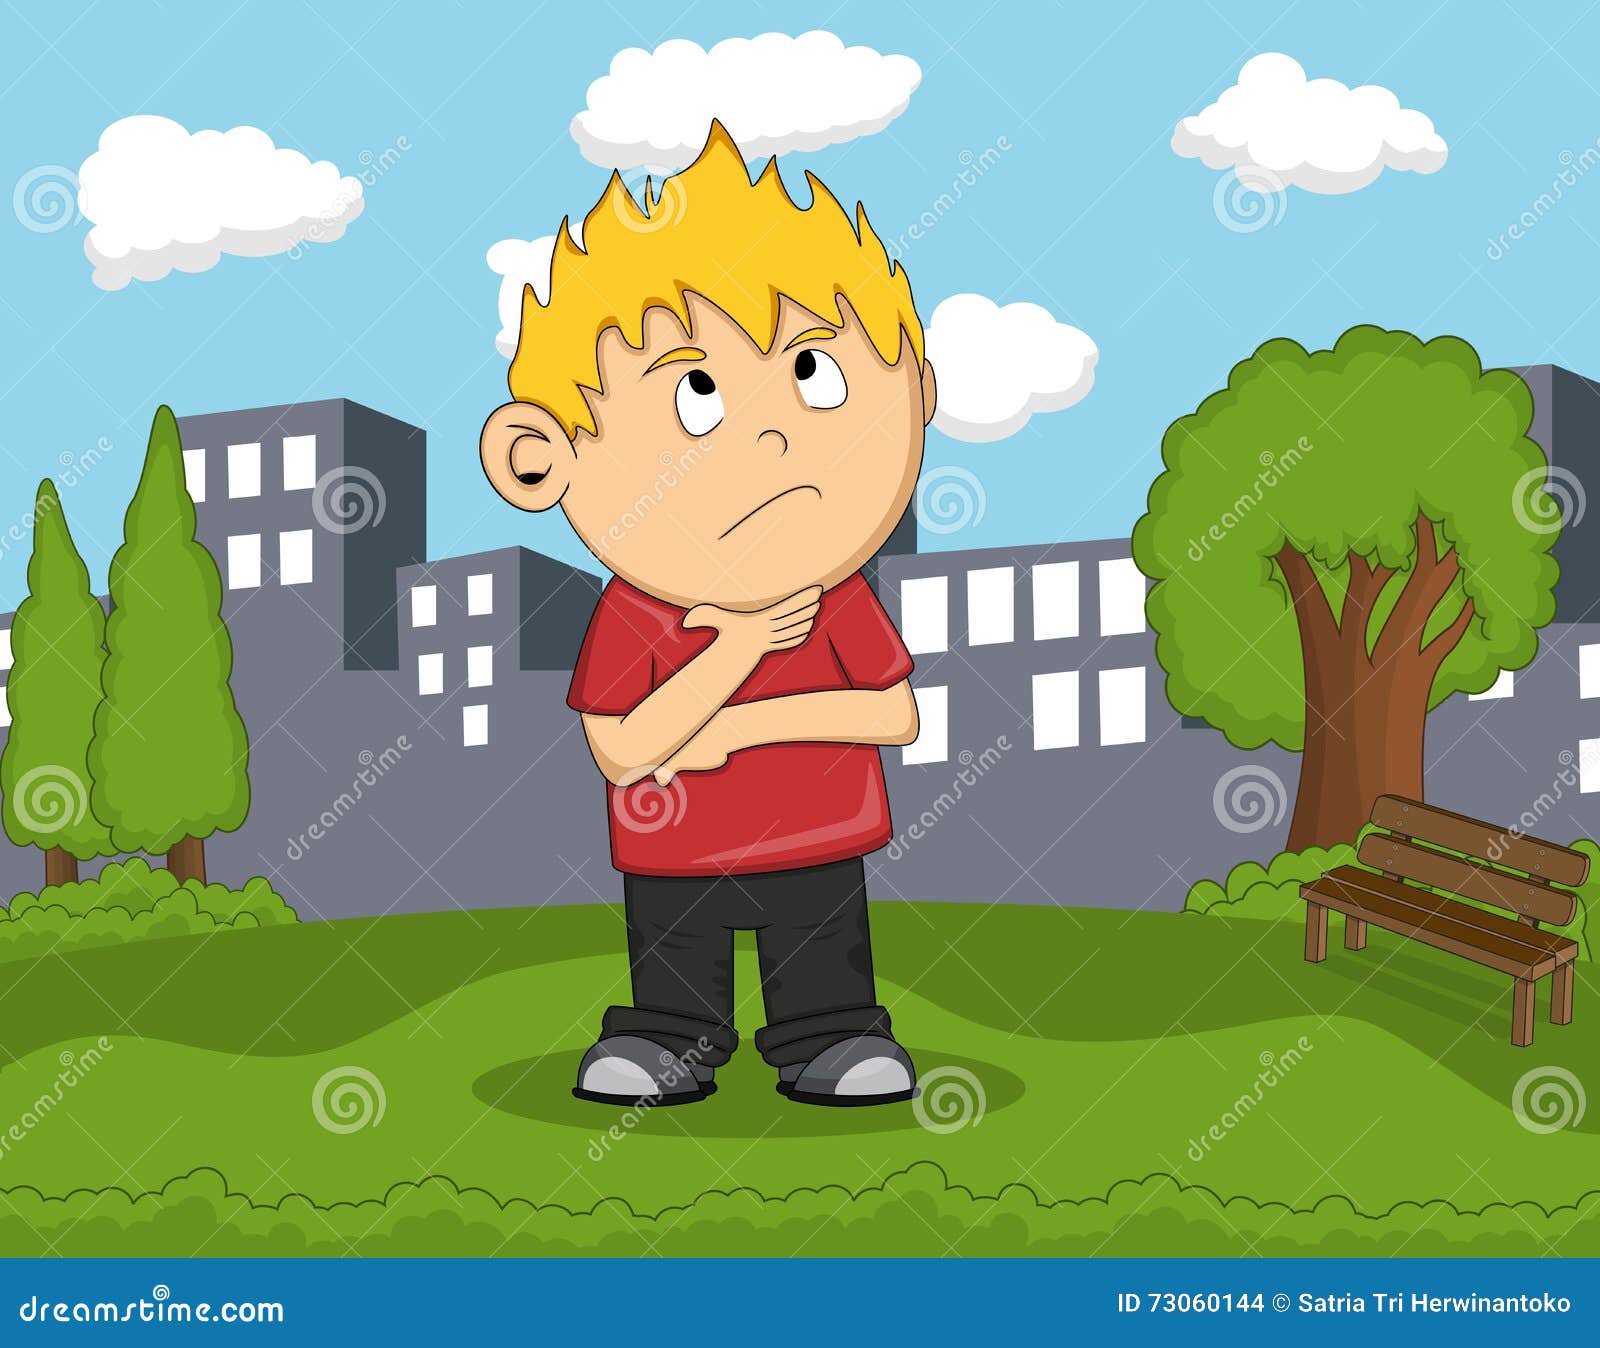 A Boy Thinking on the Park Cartoon Stock Vector - Illustration of brain,  building: 73060144